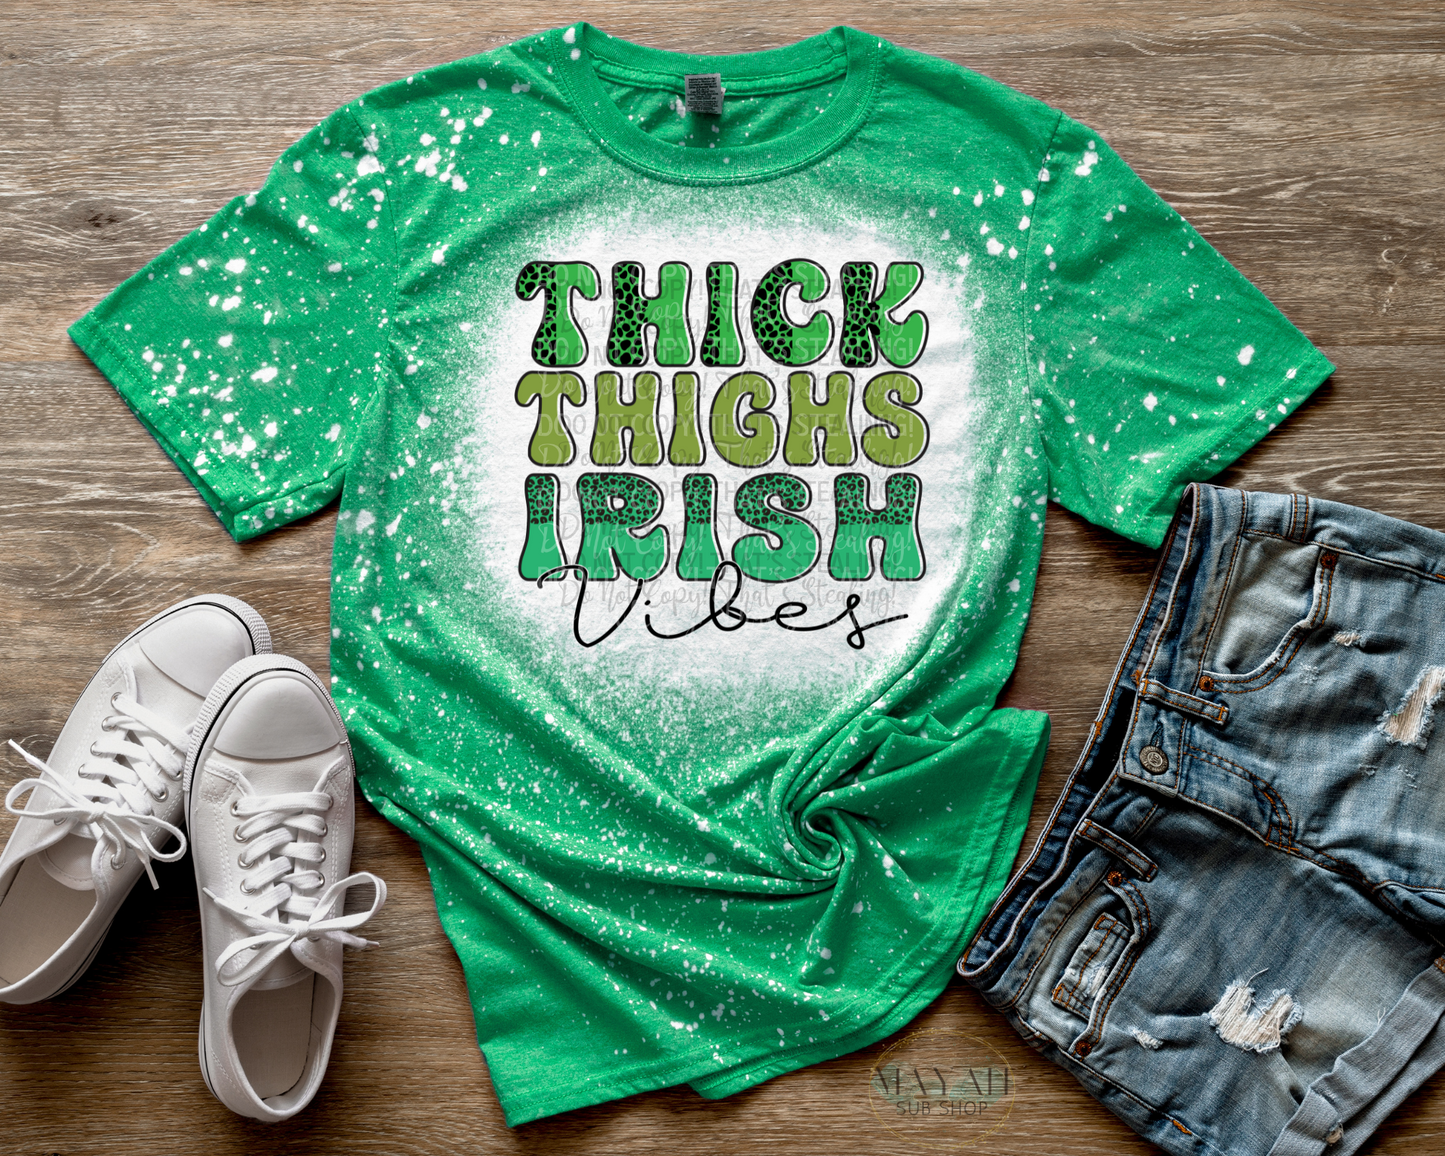 Thick thighs irish vibes bleached tee. -Mayan Sub Shop